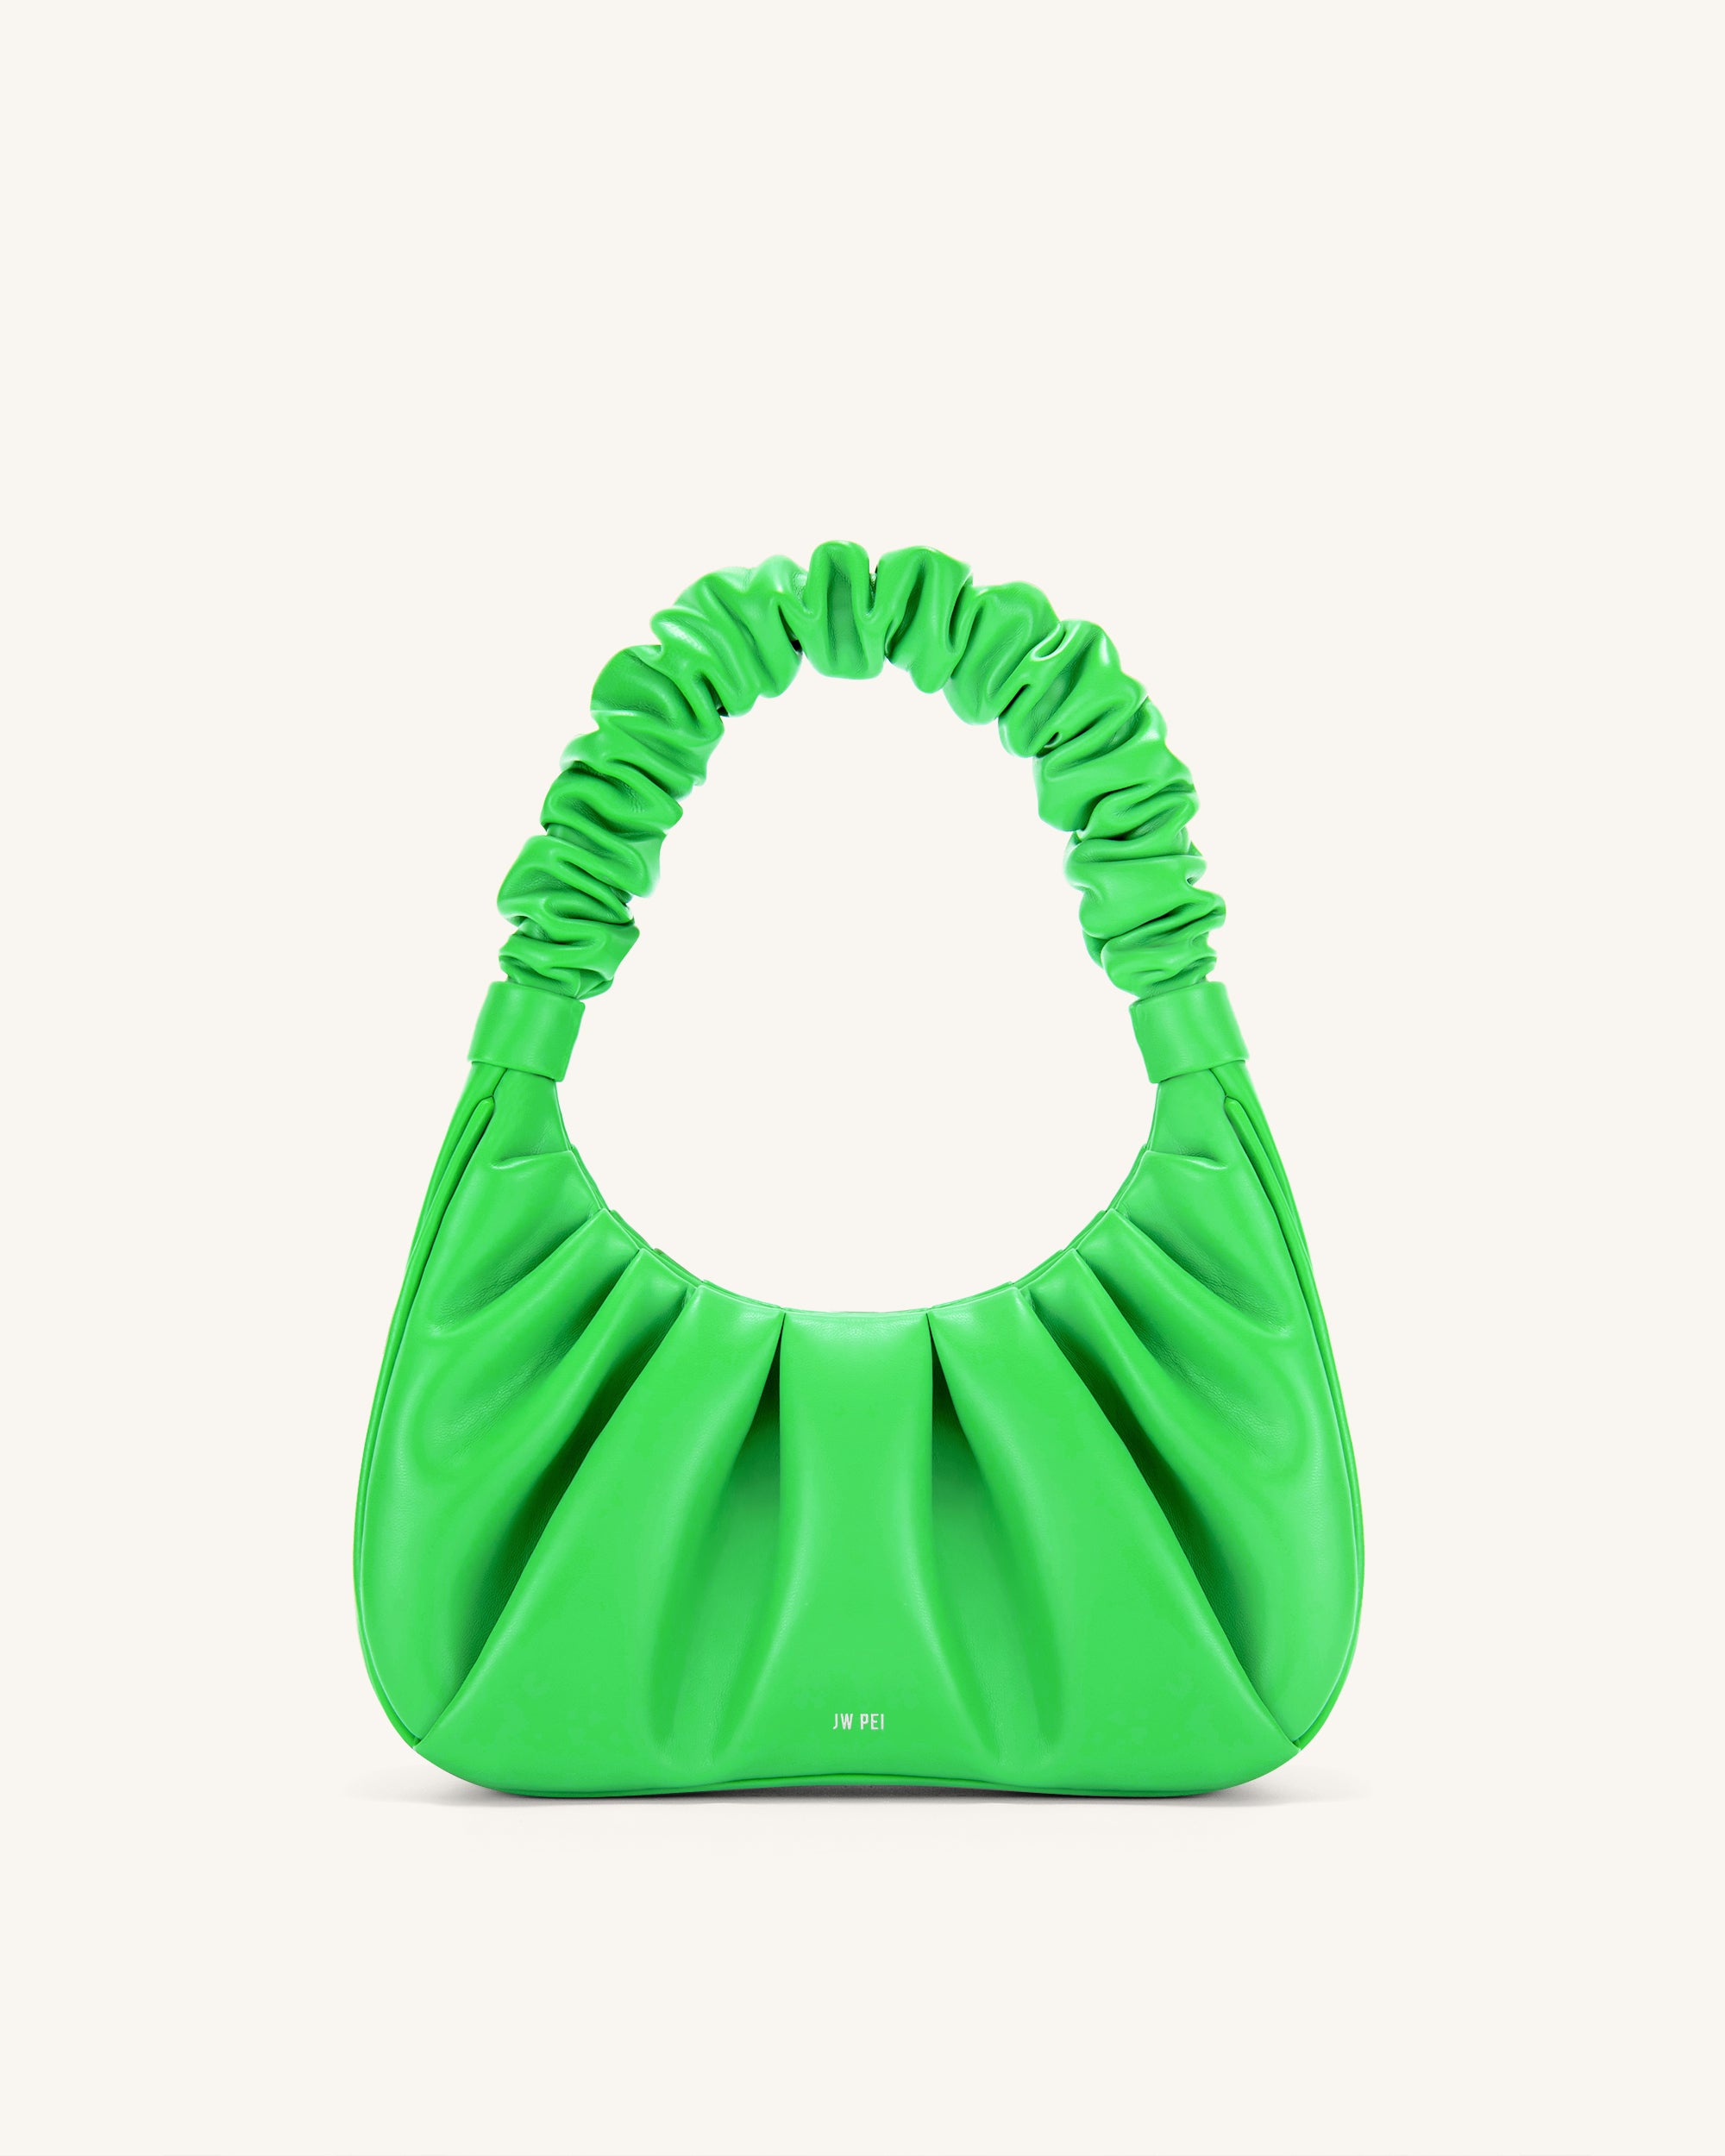 JW PEI Vegan Leather Gabbi Ruched Hobo Handbag - NUTELLA Color